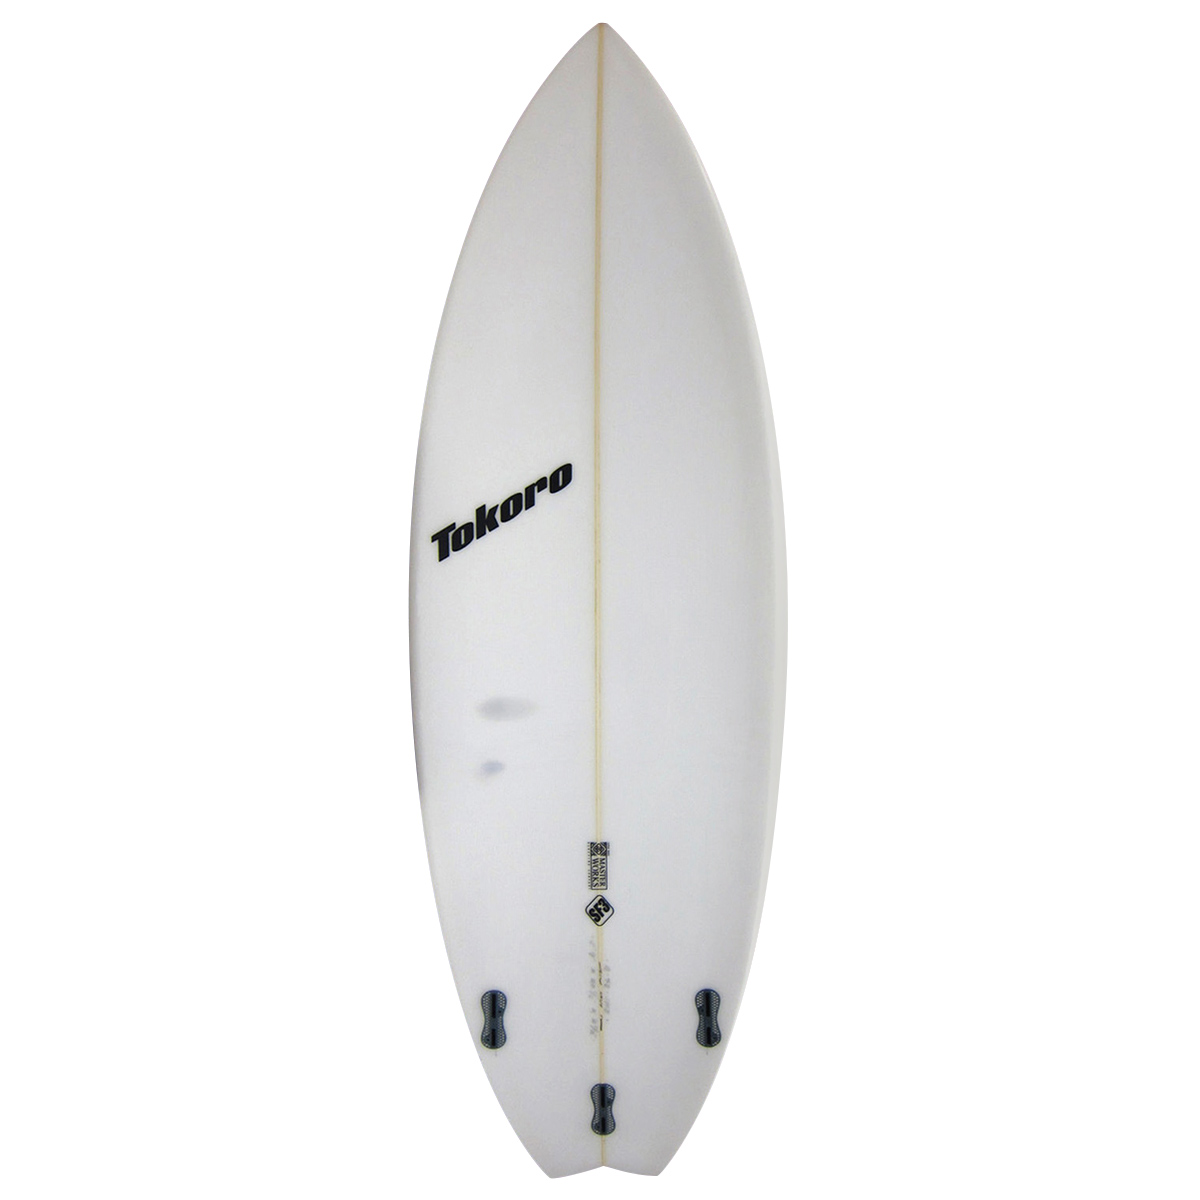 TOKORO SURFBOARDS / SF3 SWALLOW Custom 5`9